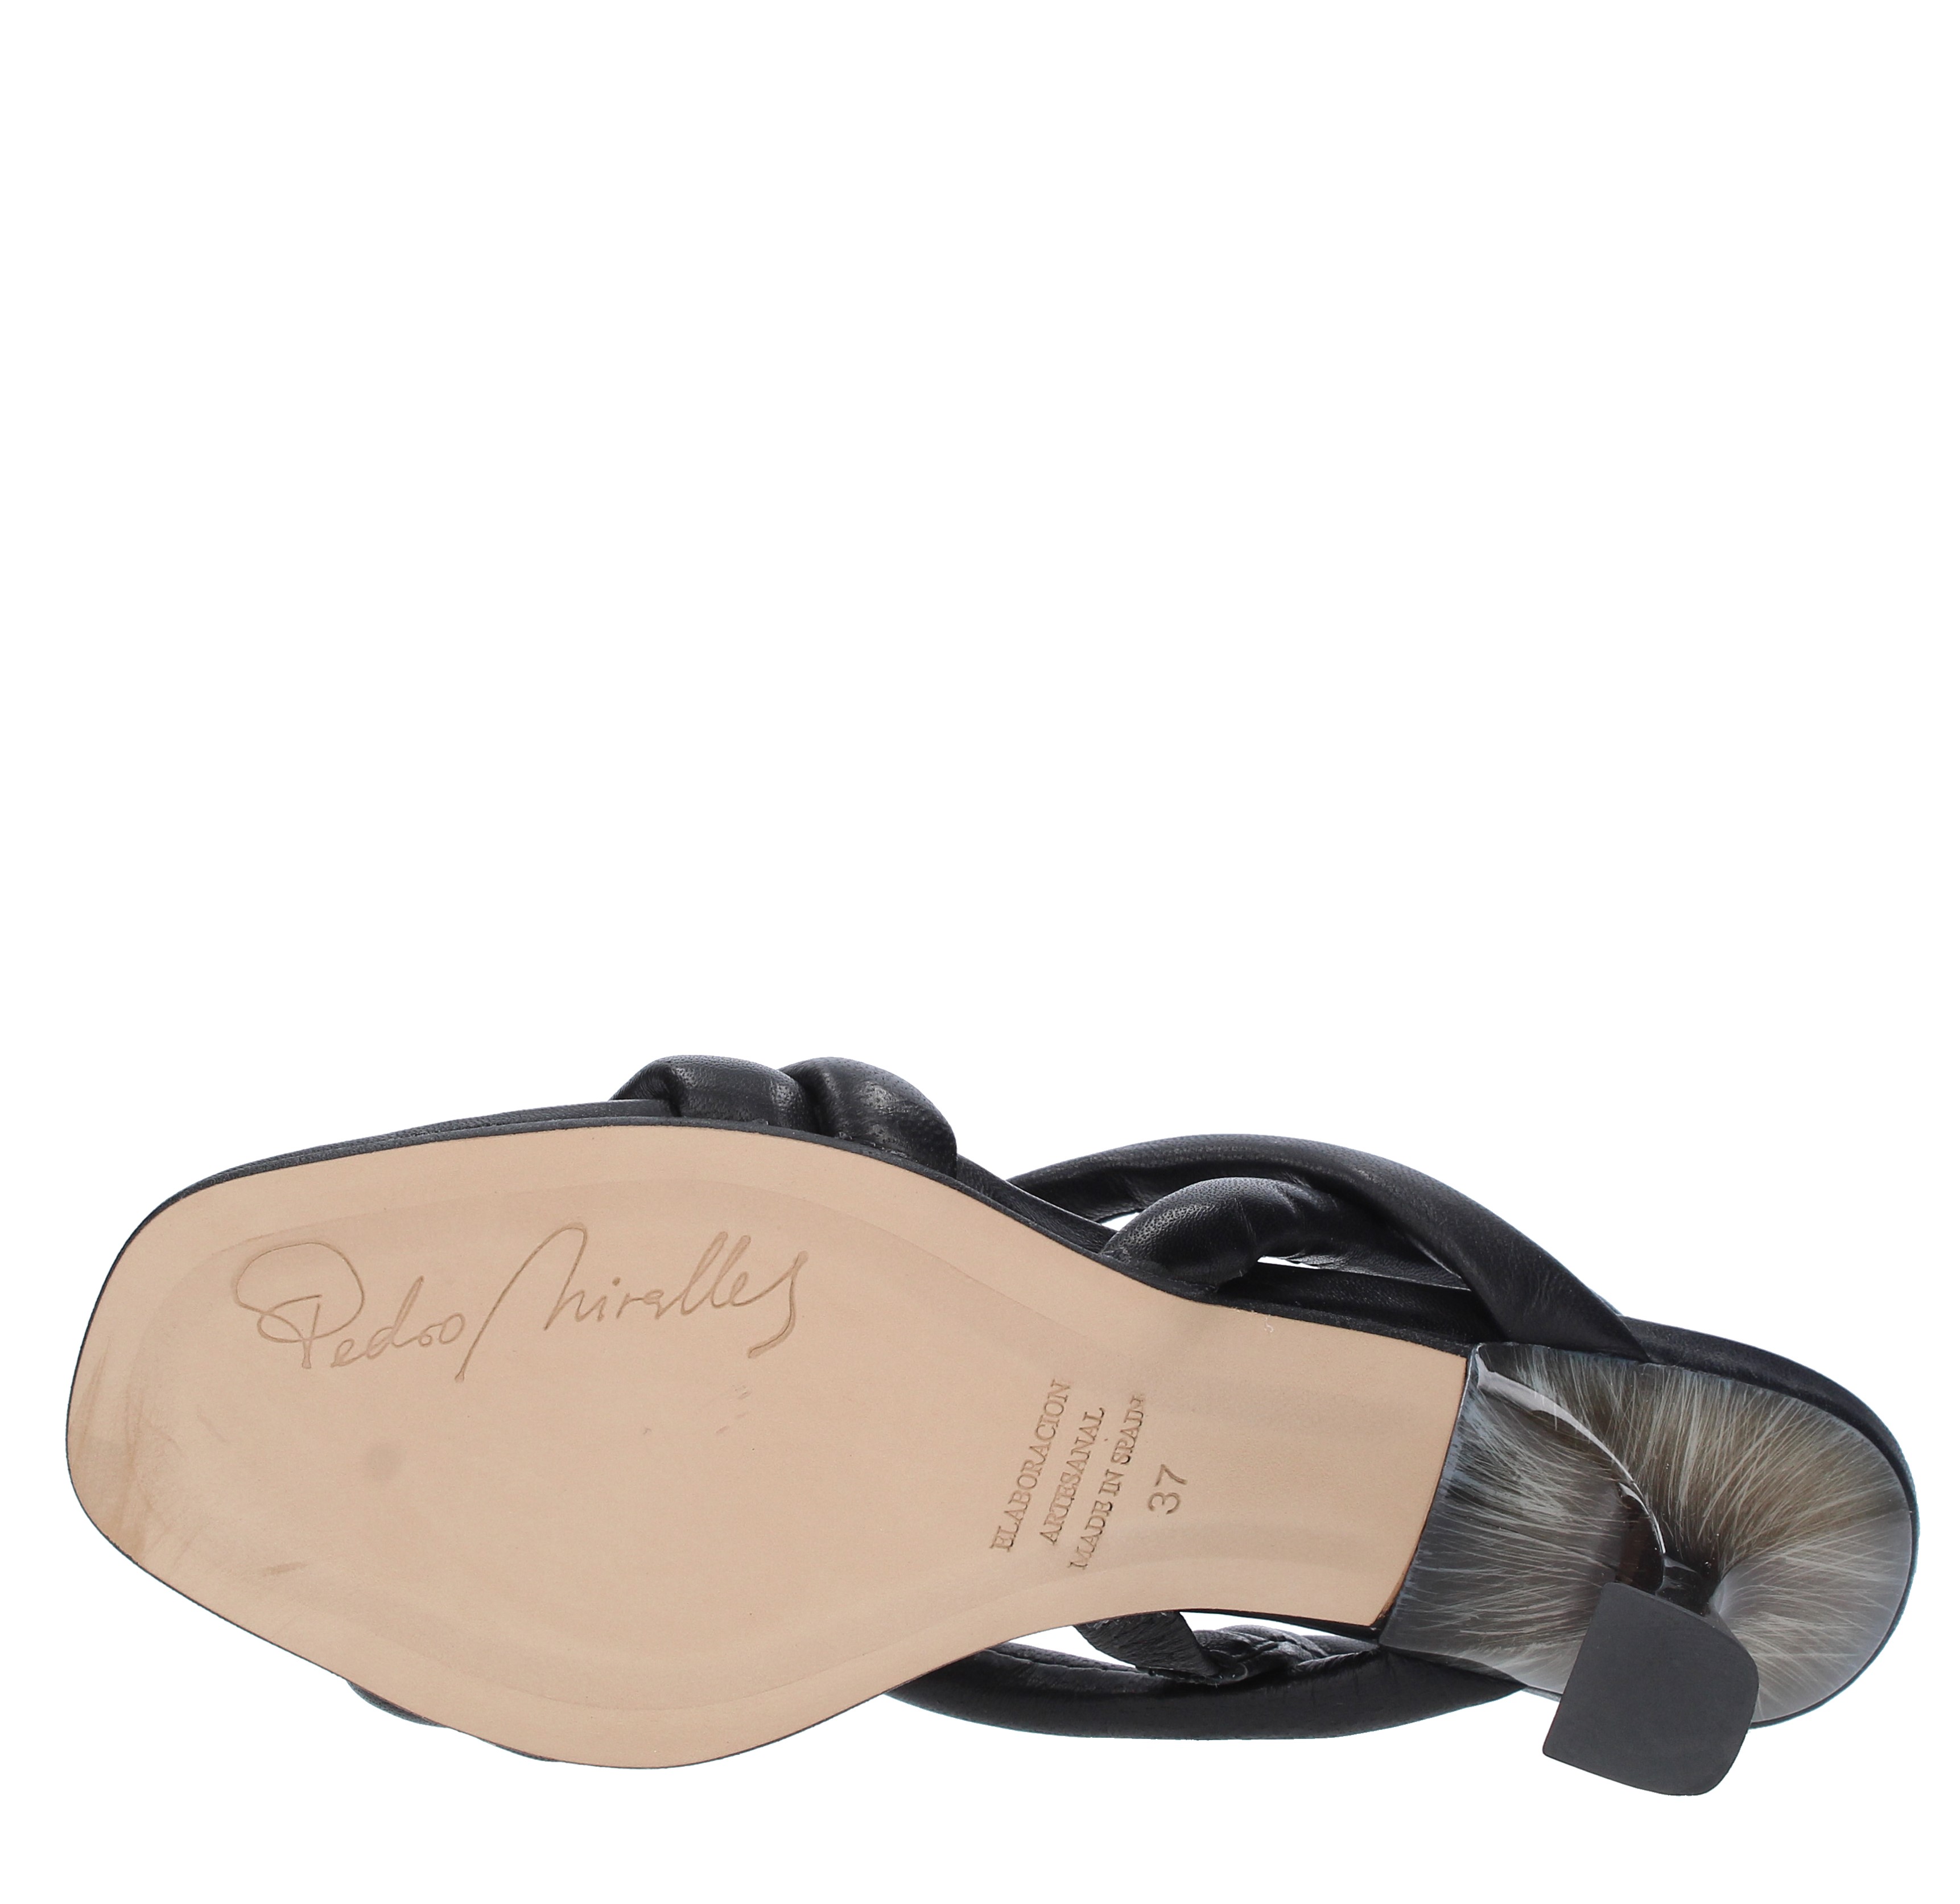 Sandali in pelle - PEDRO MIRALLES - Ginevra calzature